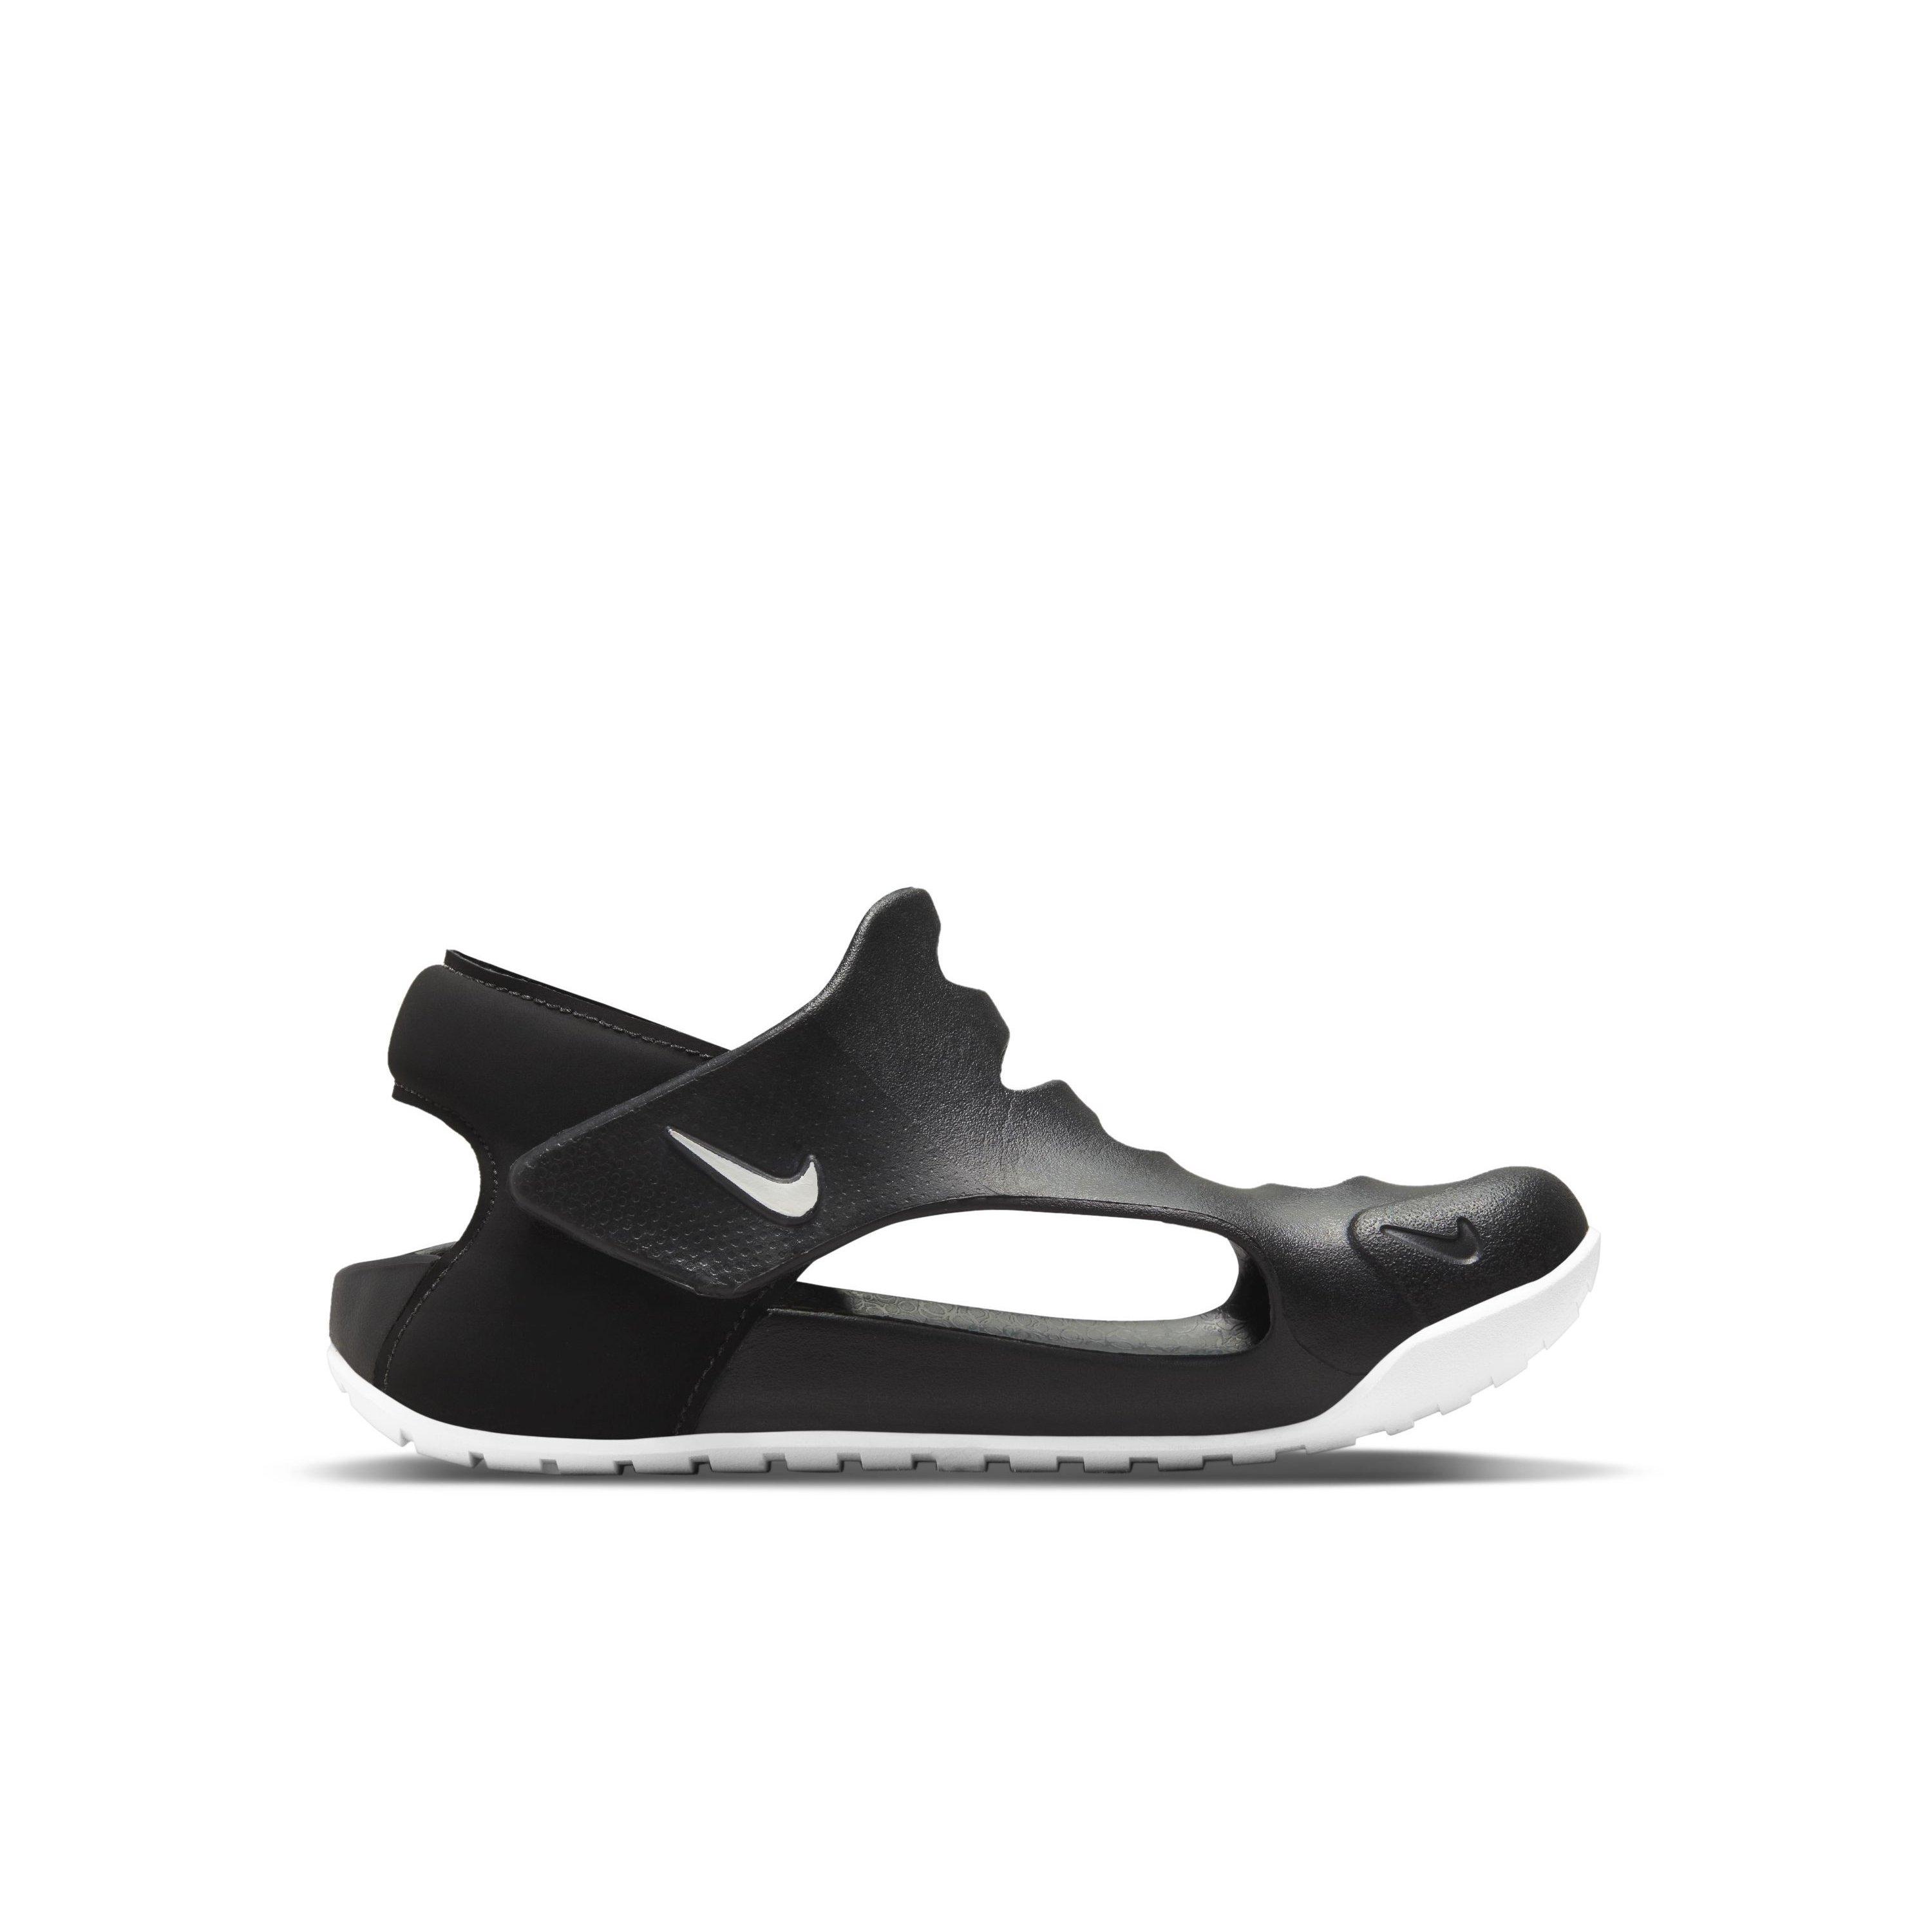 Nike Sunray Protect 3 "Black/White" Sandal